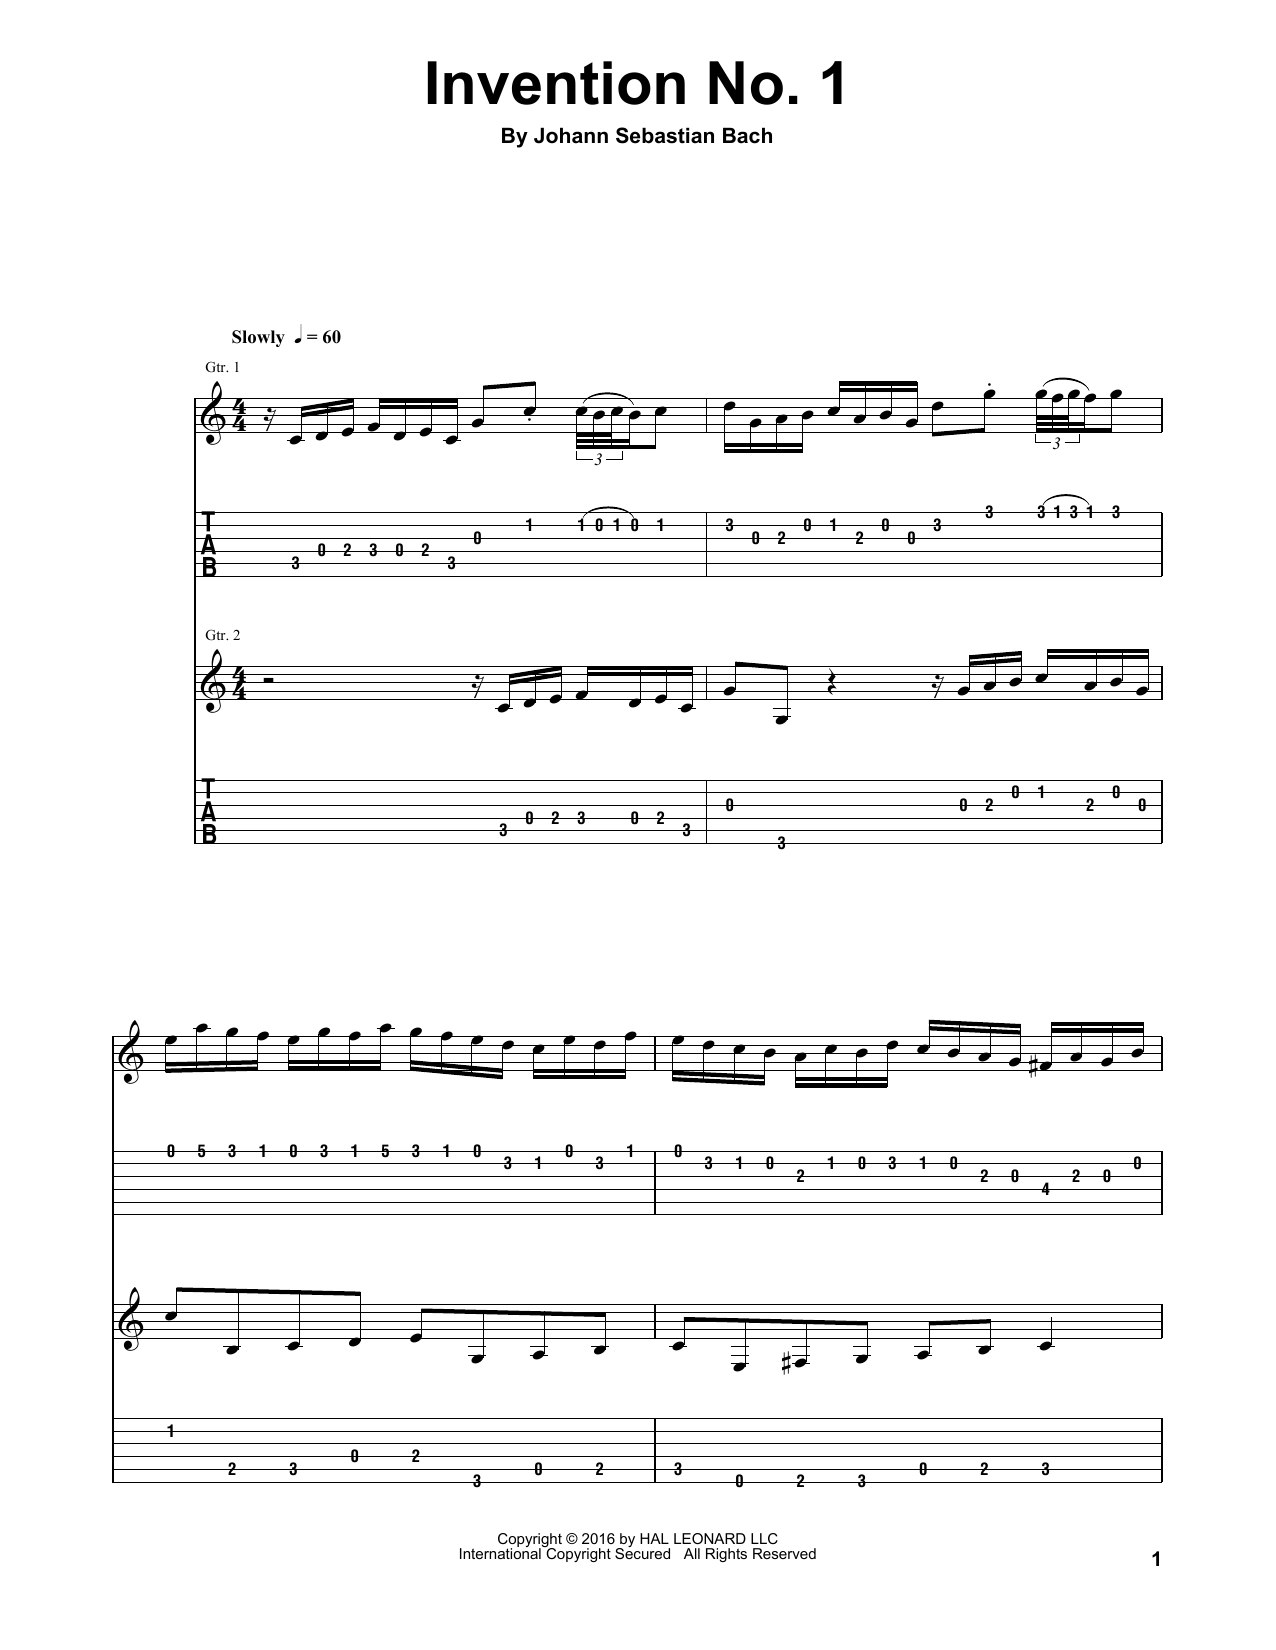 Johann Sebastian Bach Invention No. 1 Sheet Music Notes & Chords for Guitar Tab Play-Along - Download or Print PDF